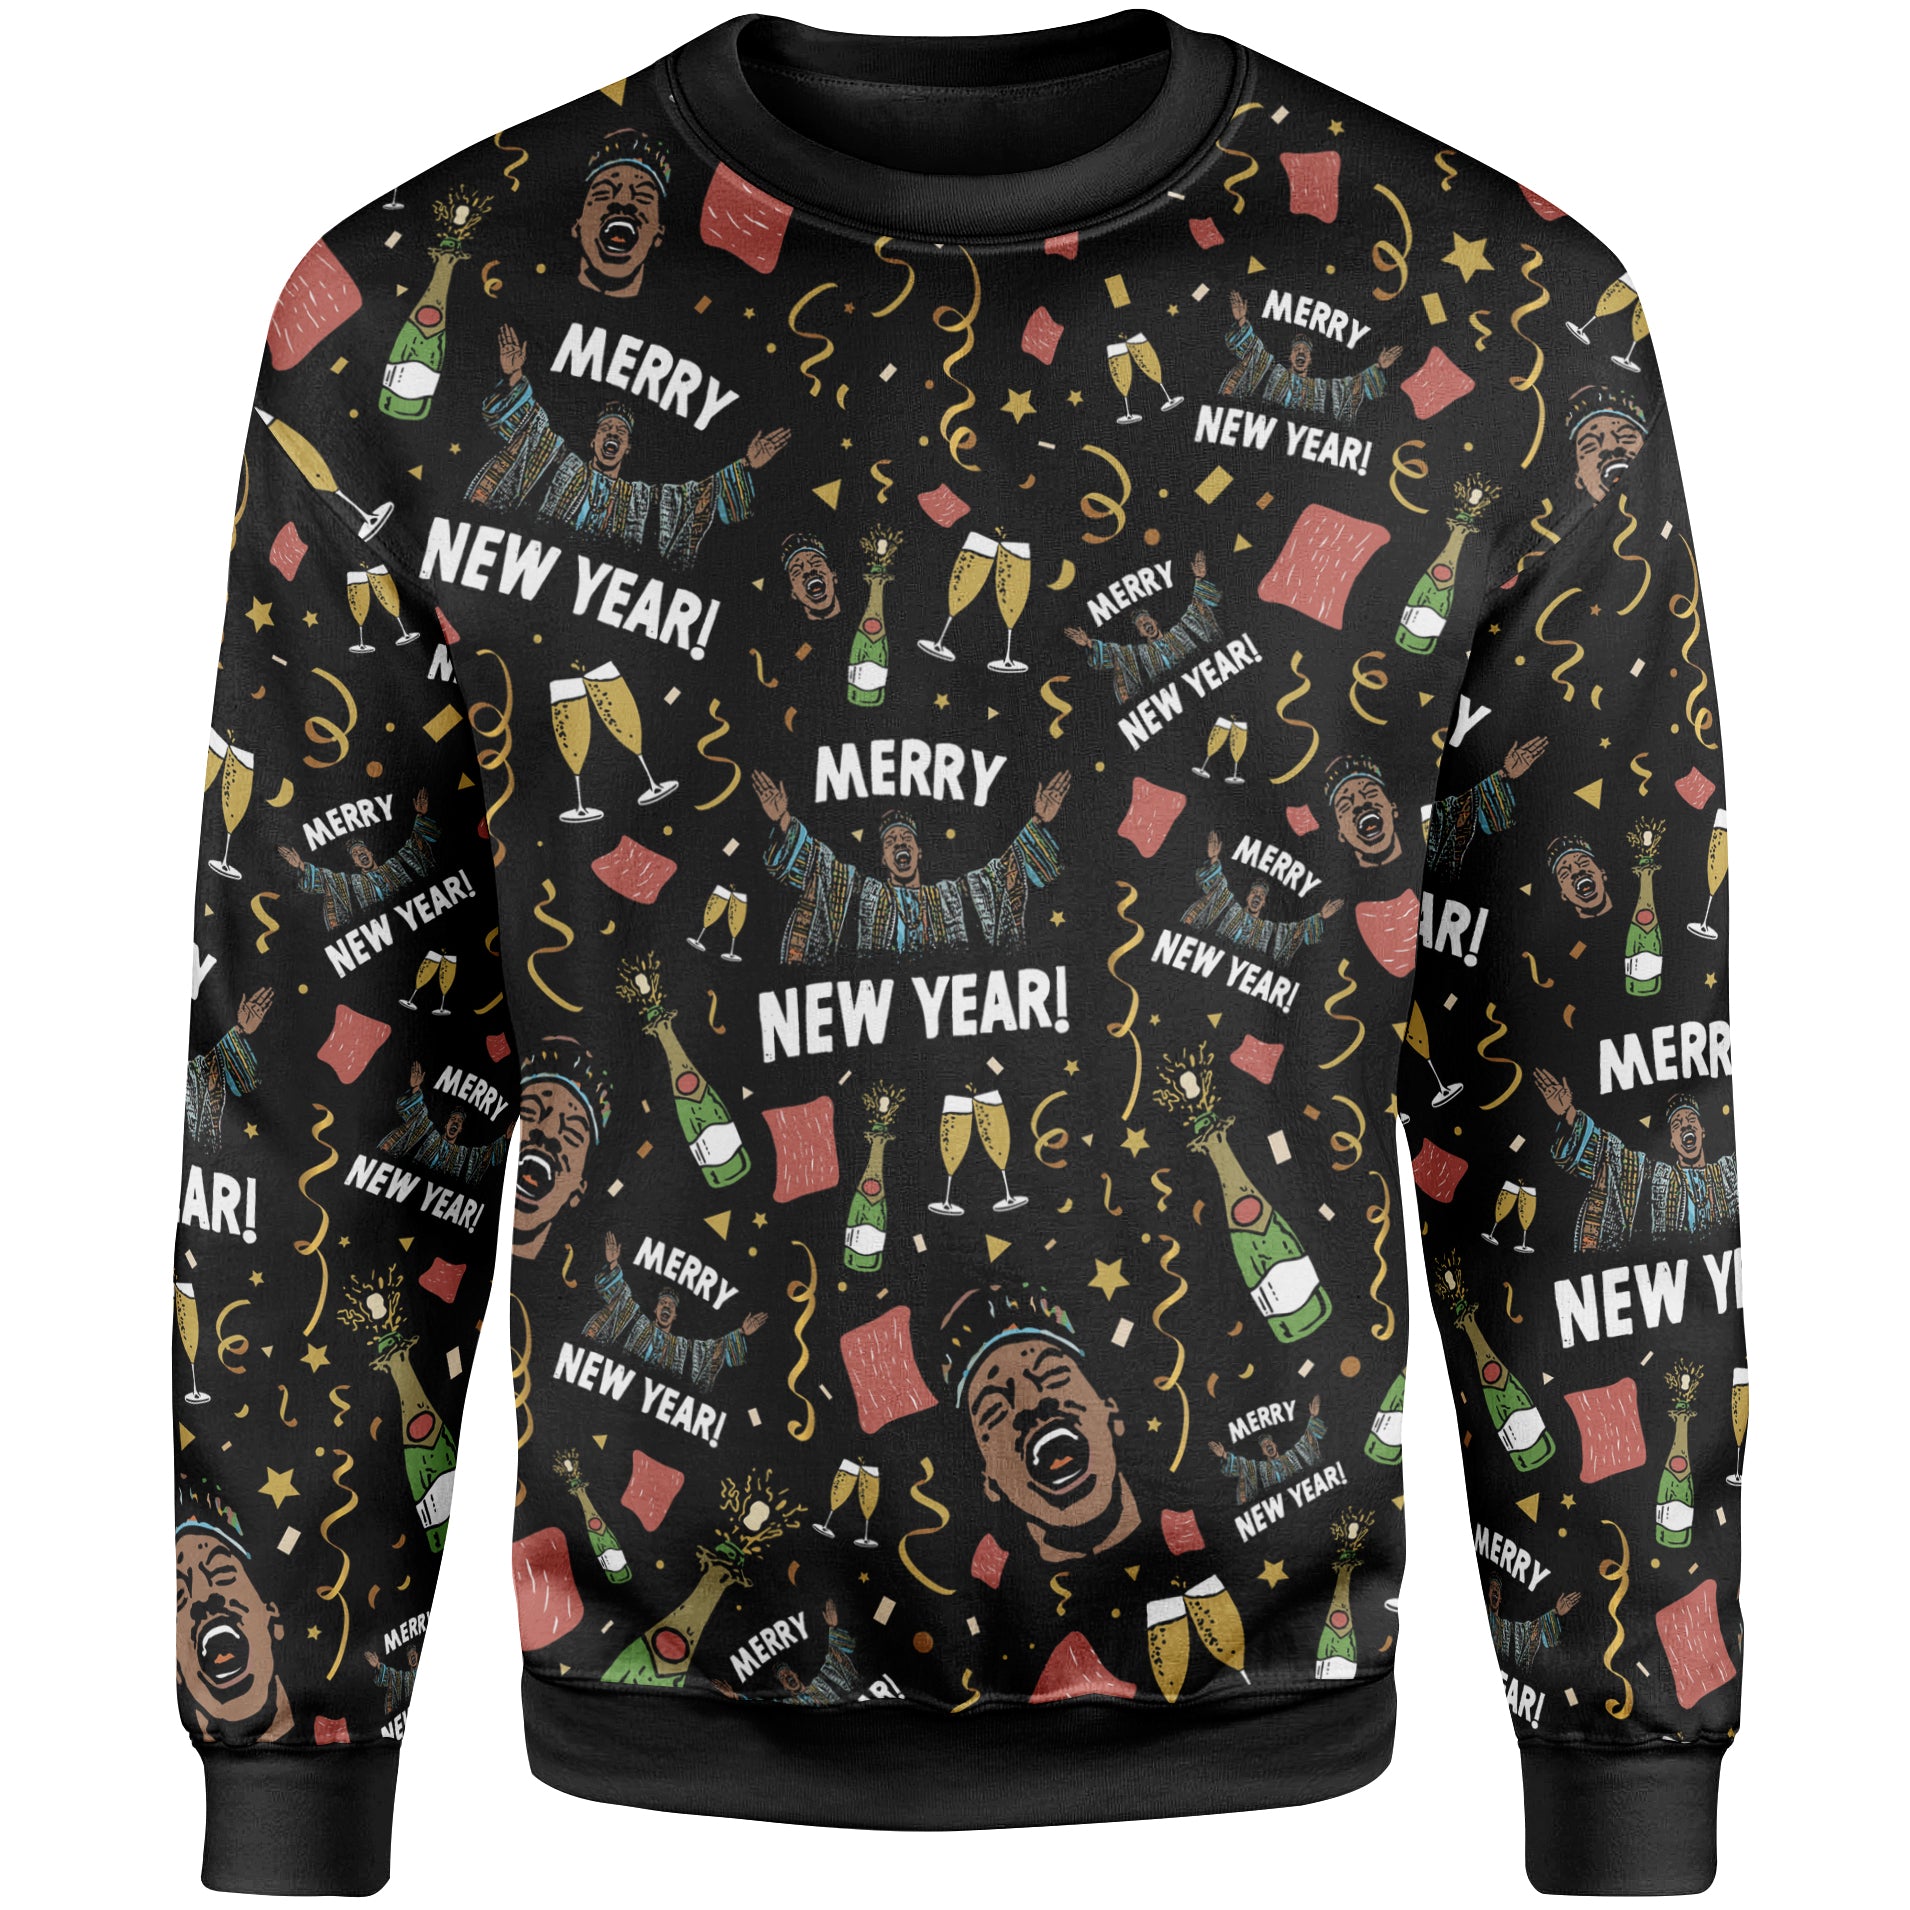 Merry New Year - All Over Sweatshirt